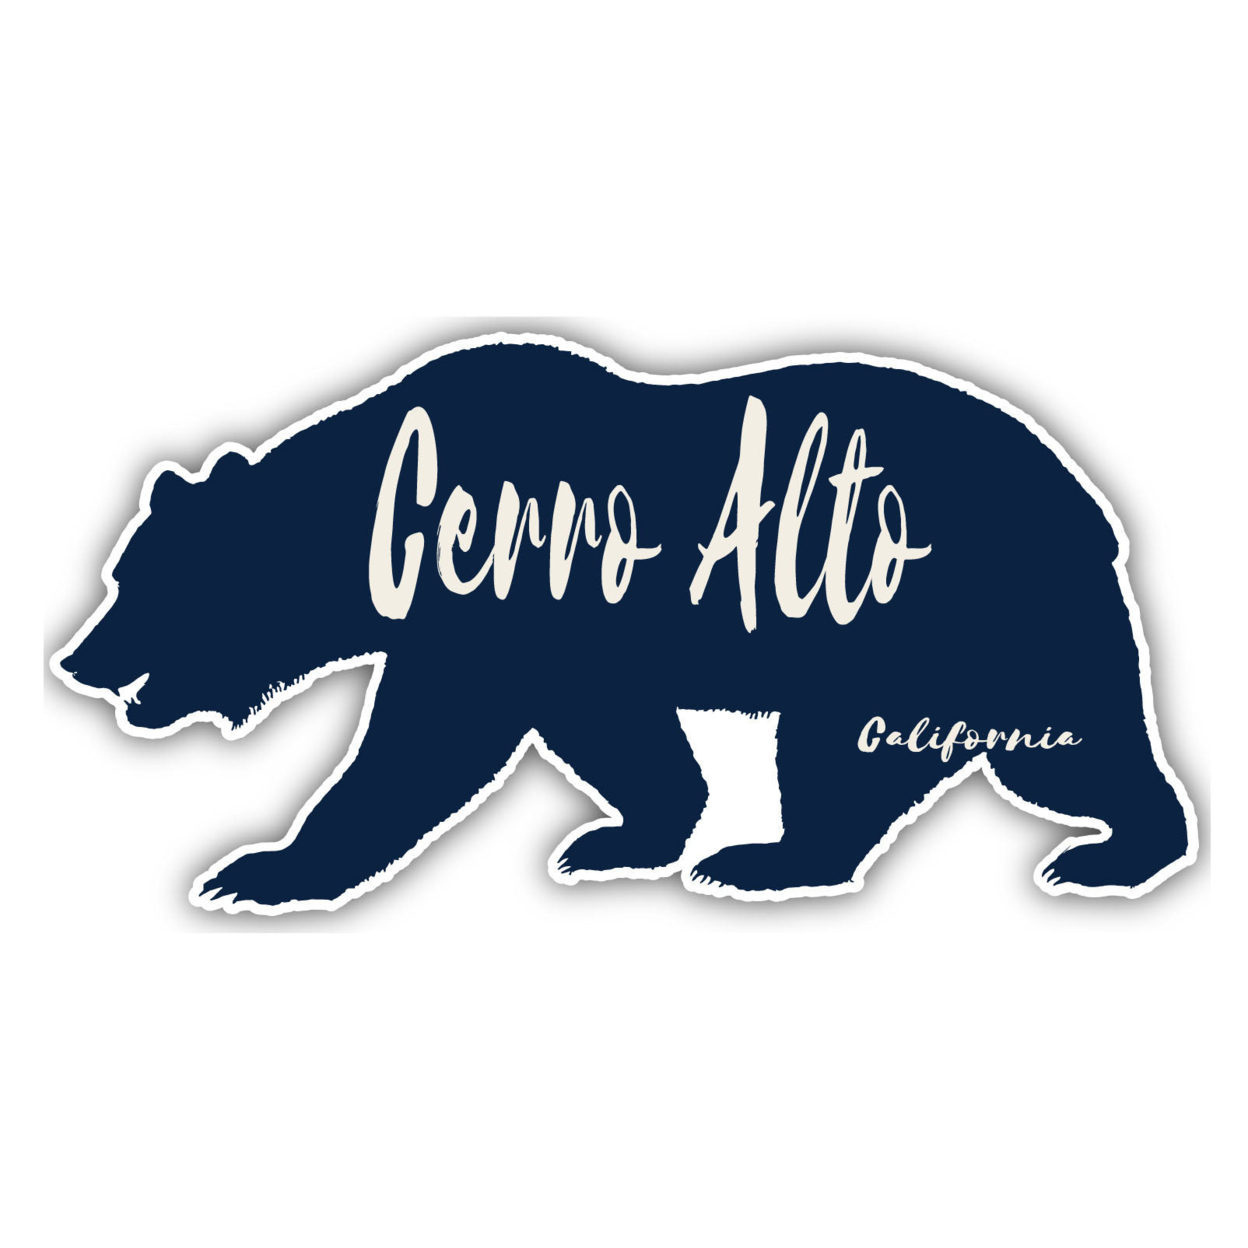 Cerro Alto California Souvenir Decorative Stickers (Choose Theme And Size) - 4-Pack, 12-Inch, Bear